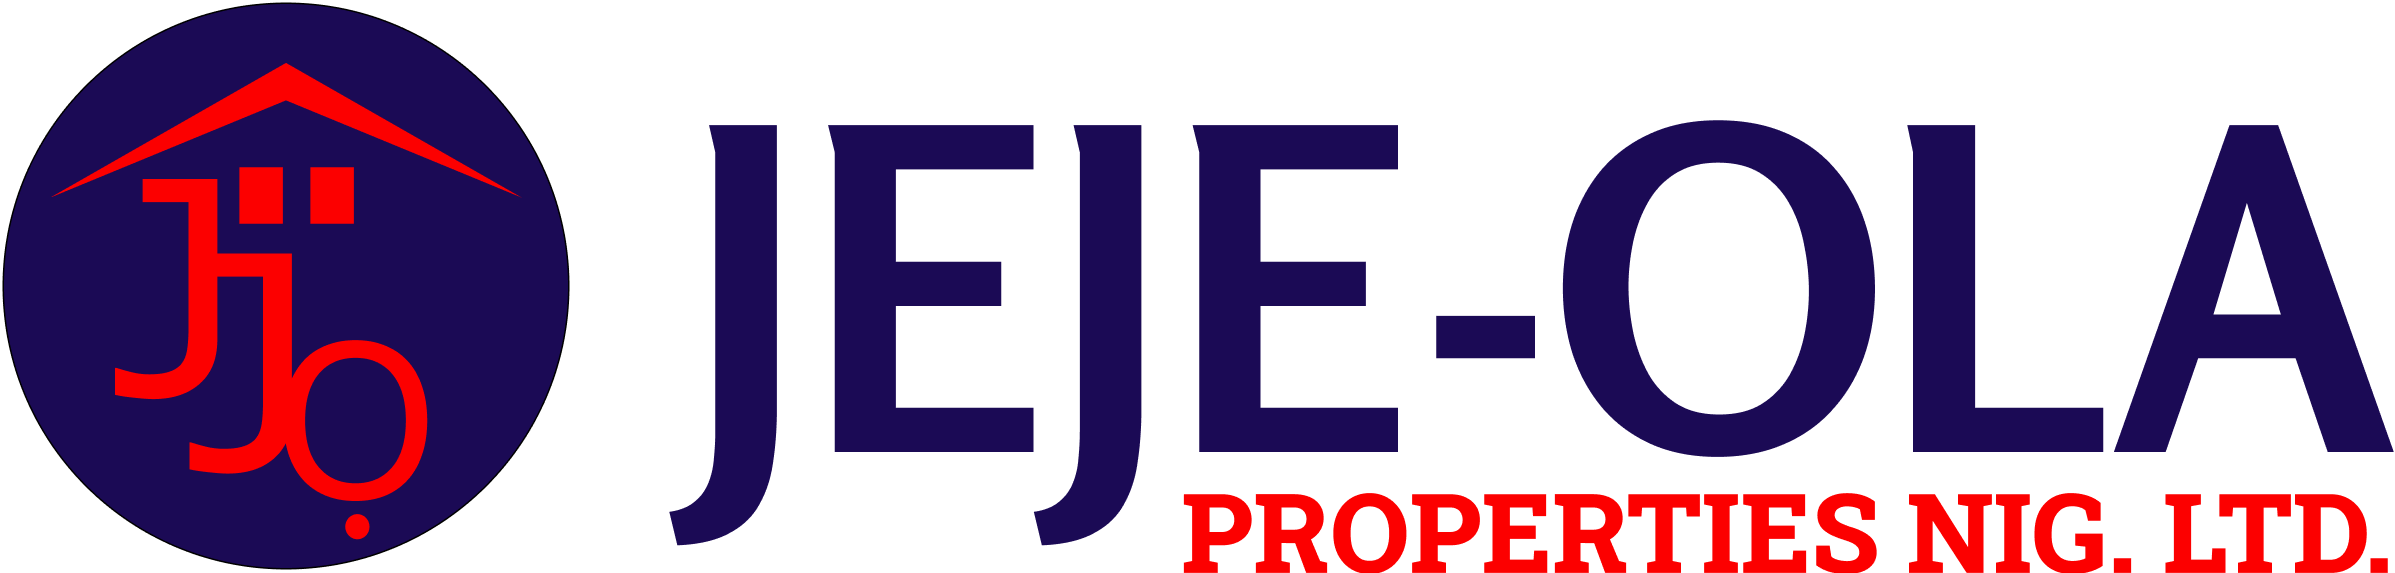 Jejeola Properties - Trust & Comfort